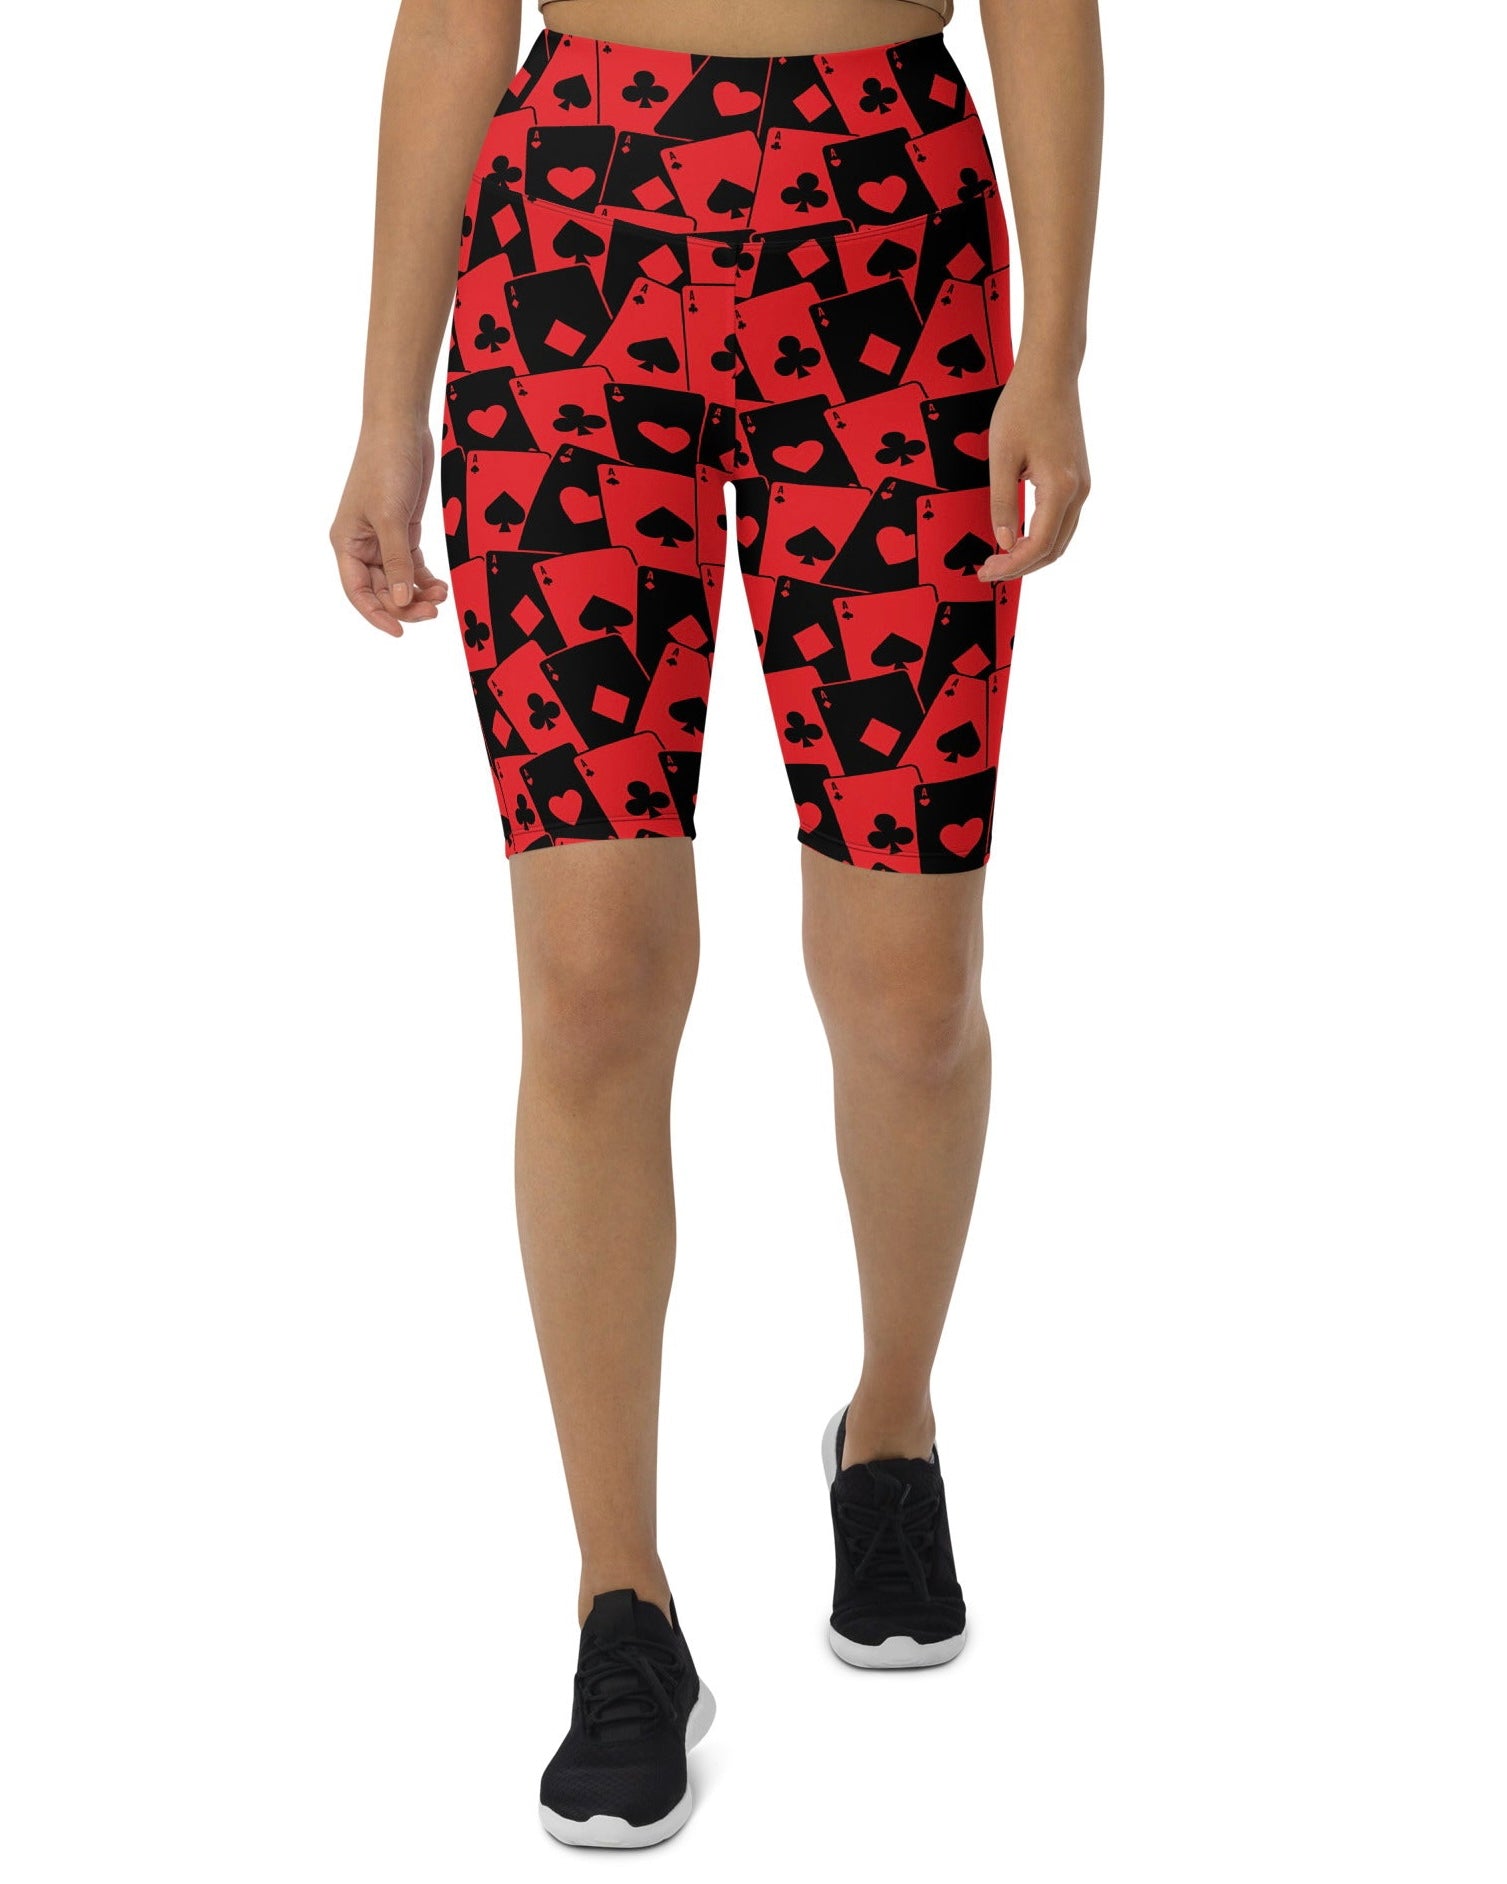 Ace Of Hearts Biker Shorts, Biker Shorts, - One Stop Rave